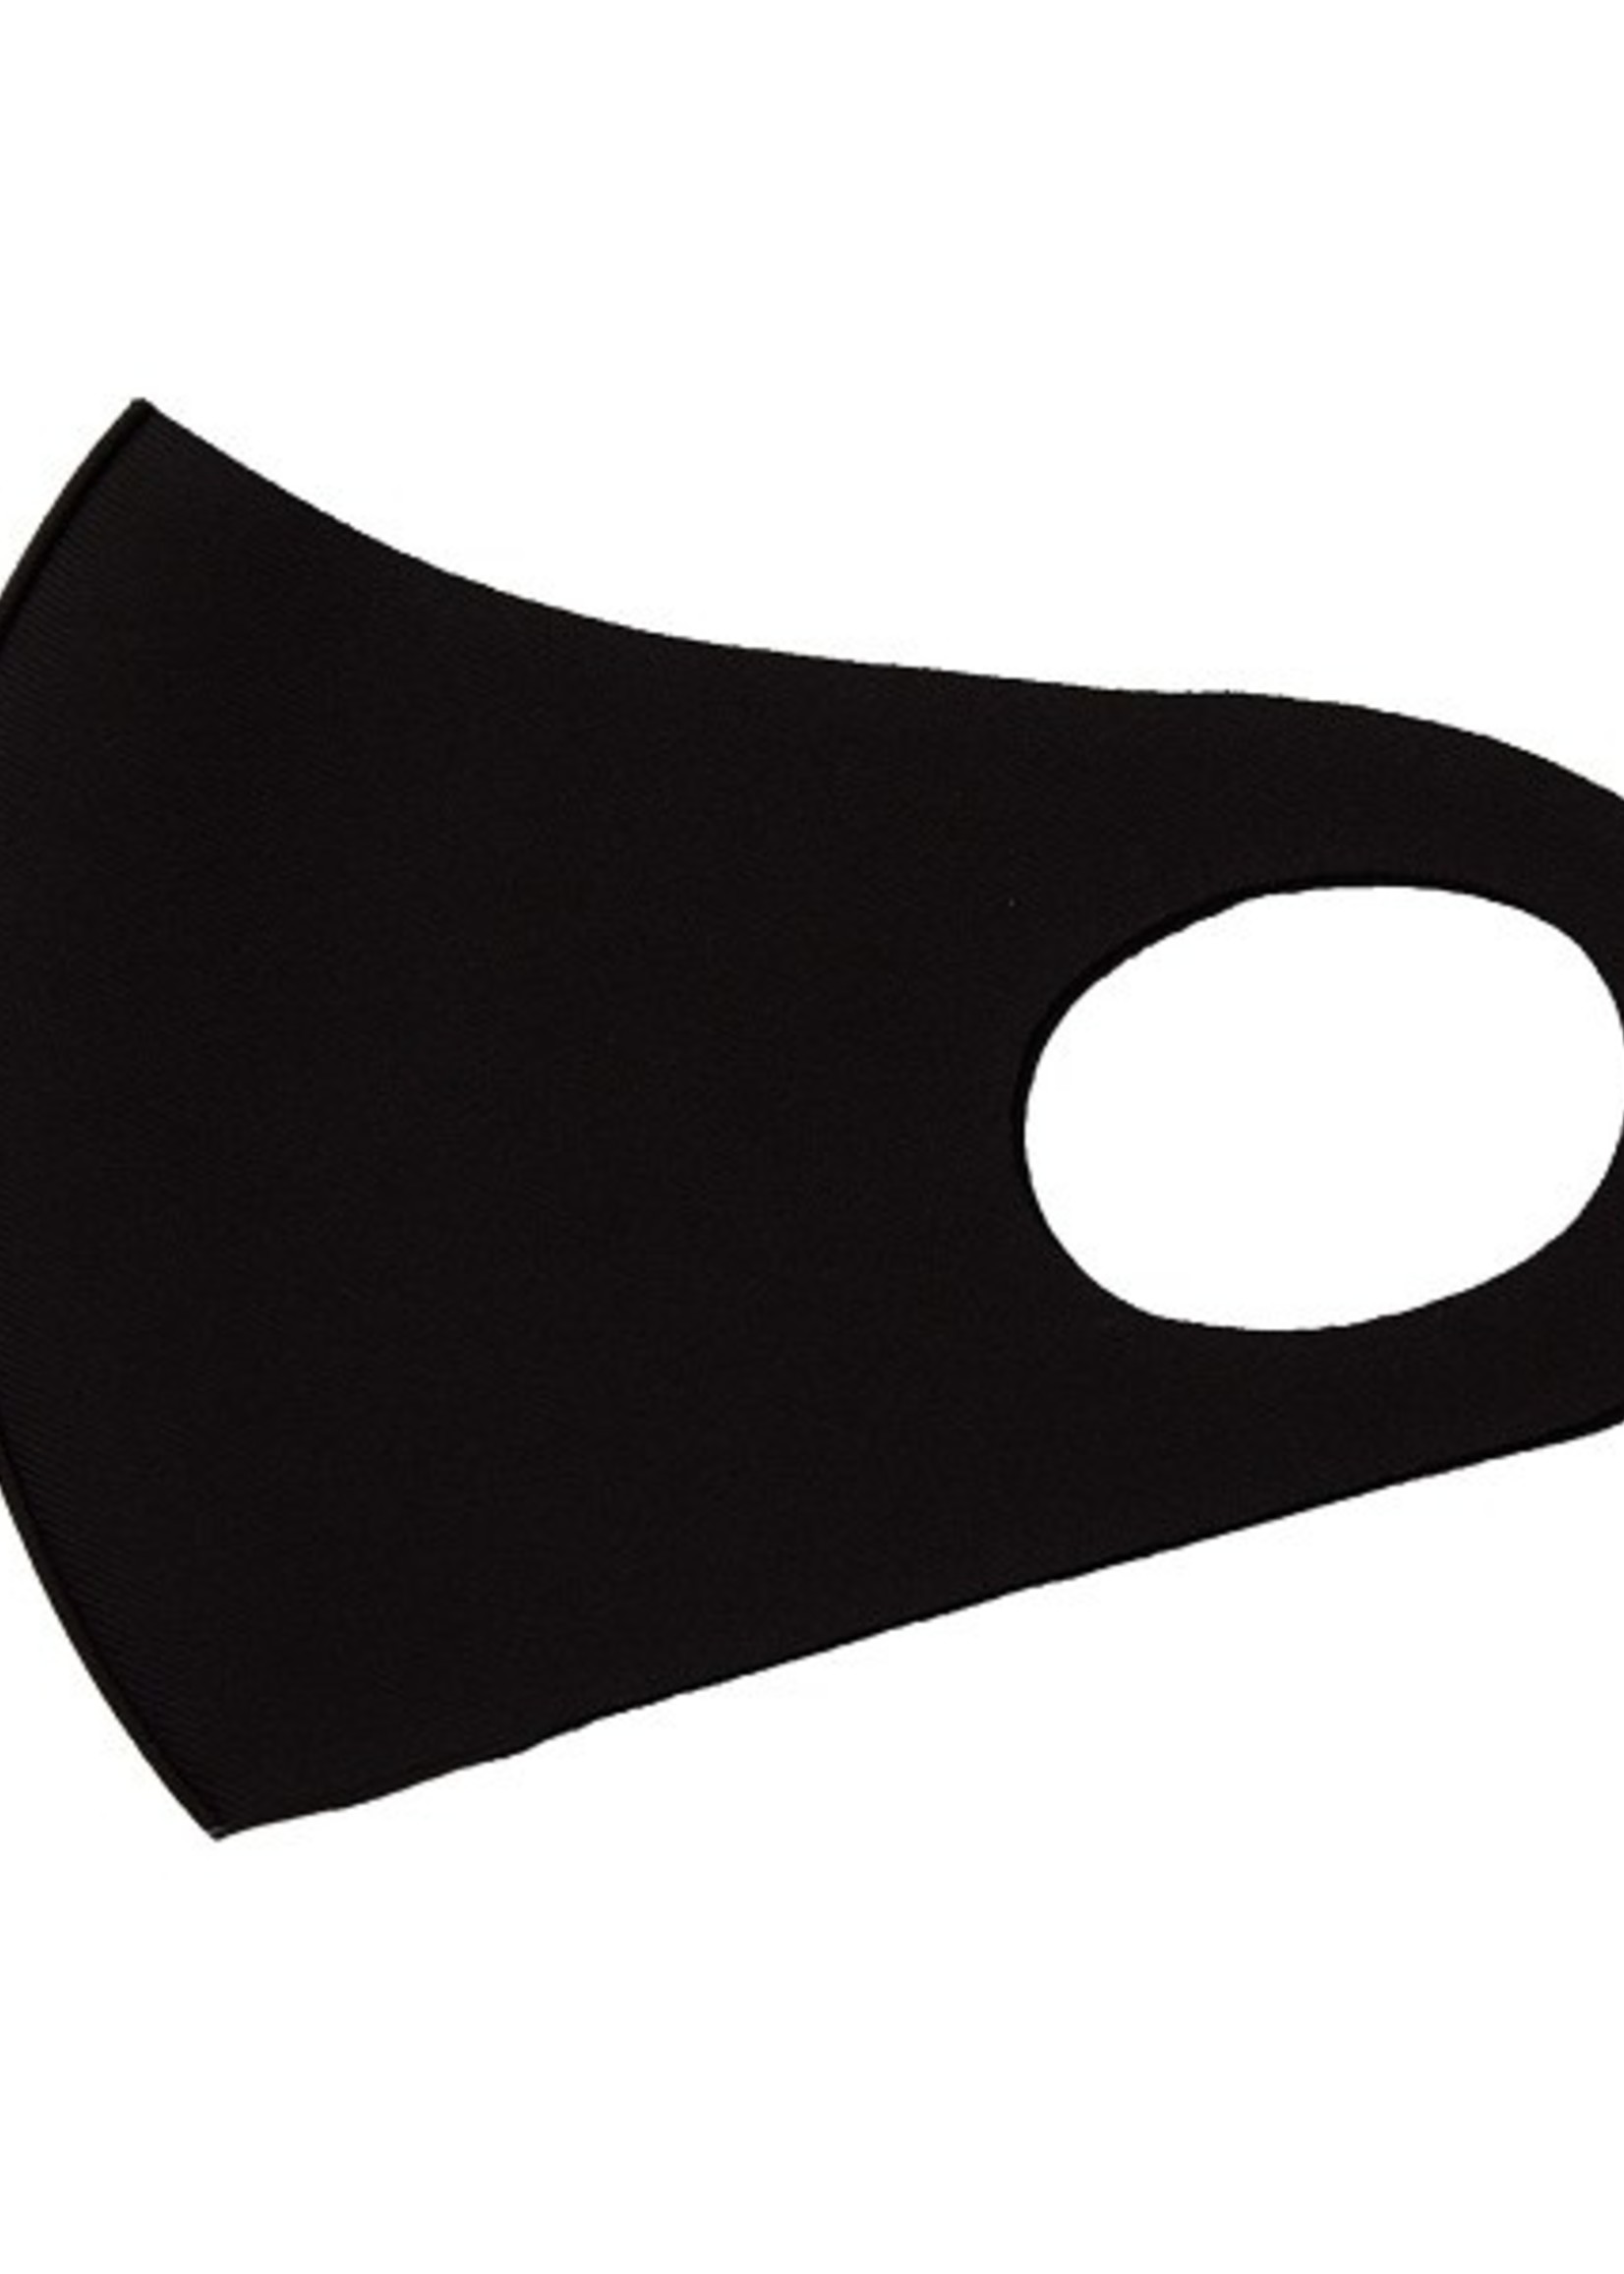 Mondkapje Niet-medisch mondkapje stof Uni kleur 17,5x12,5cm